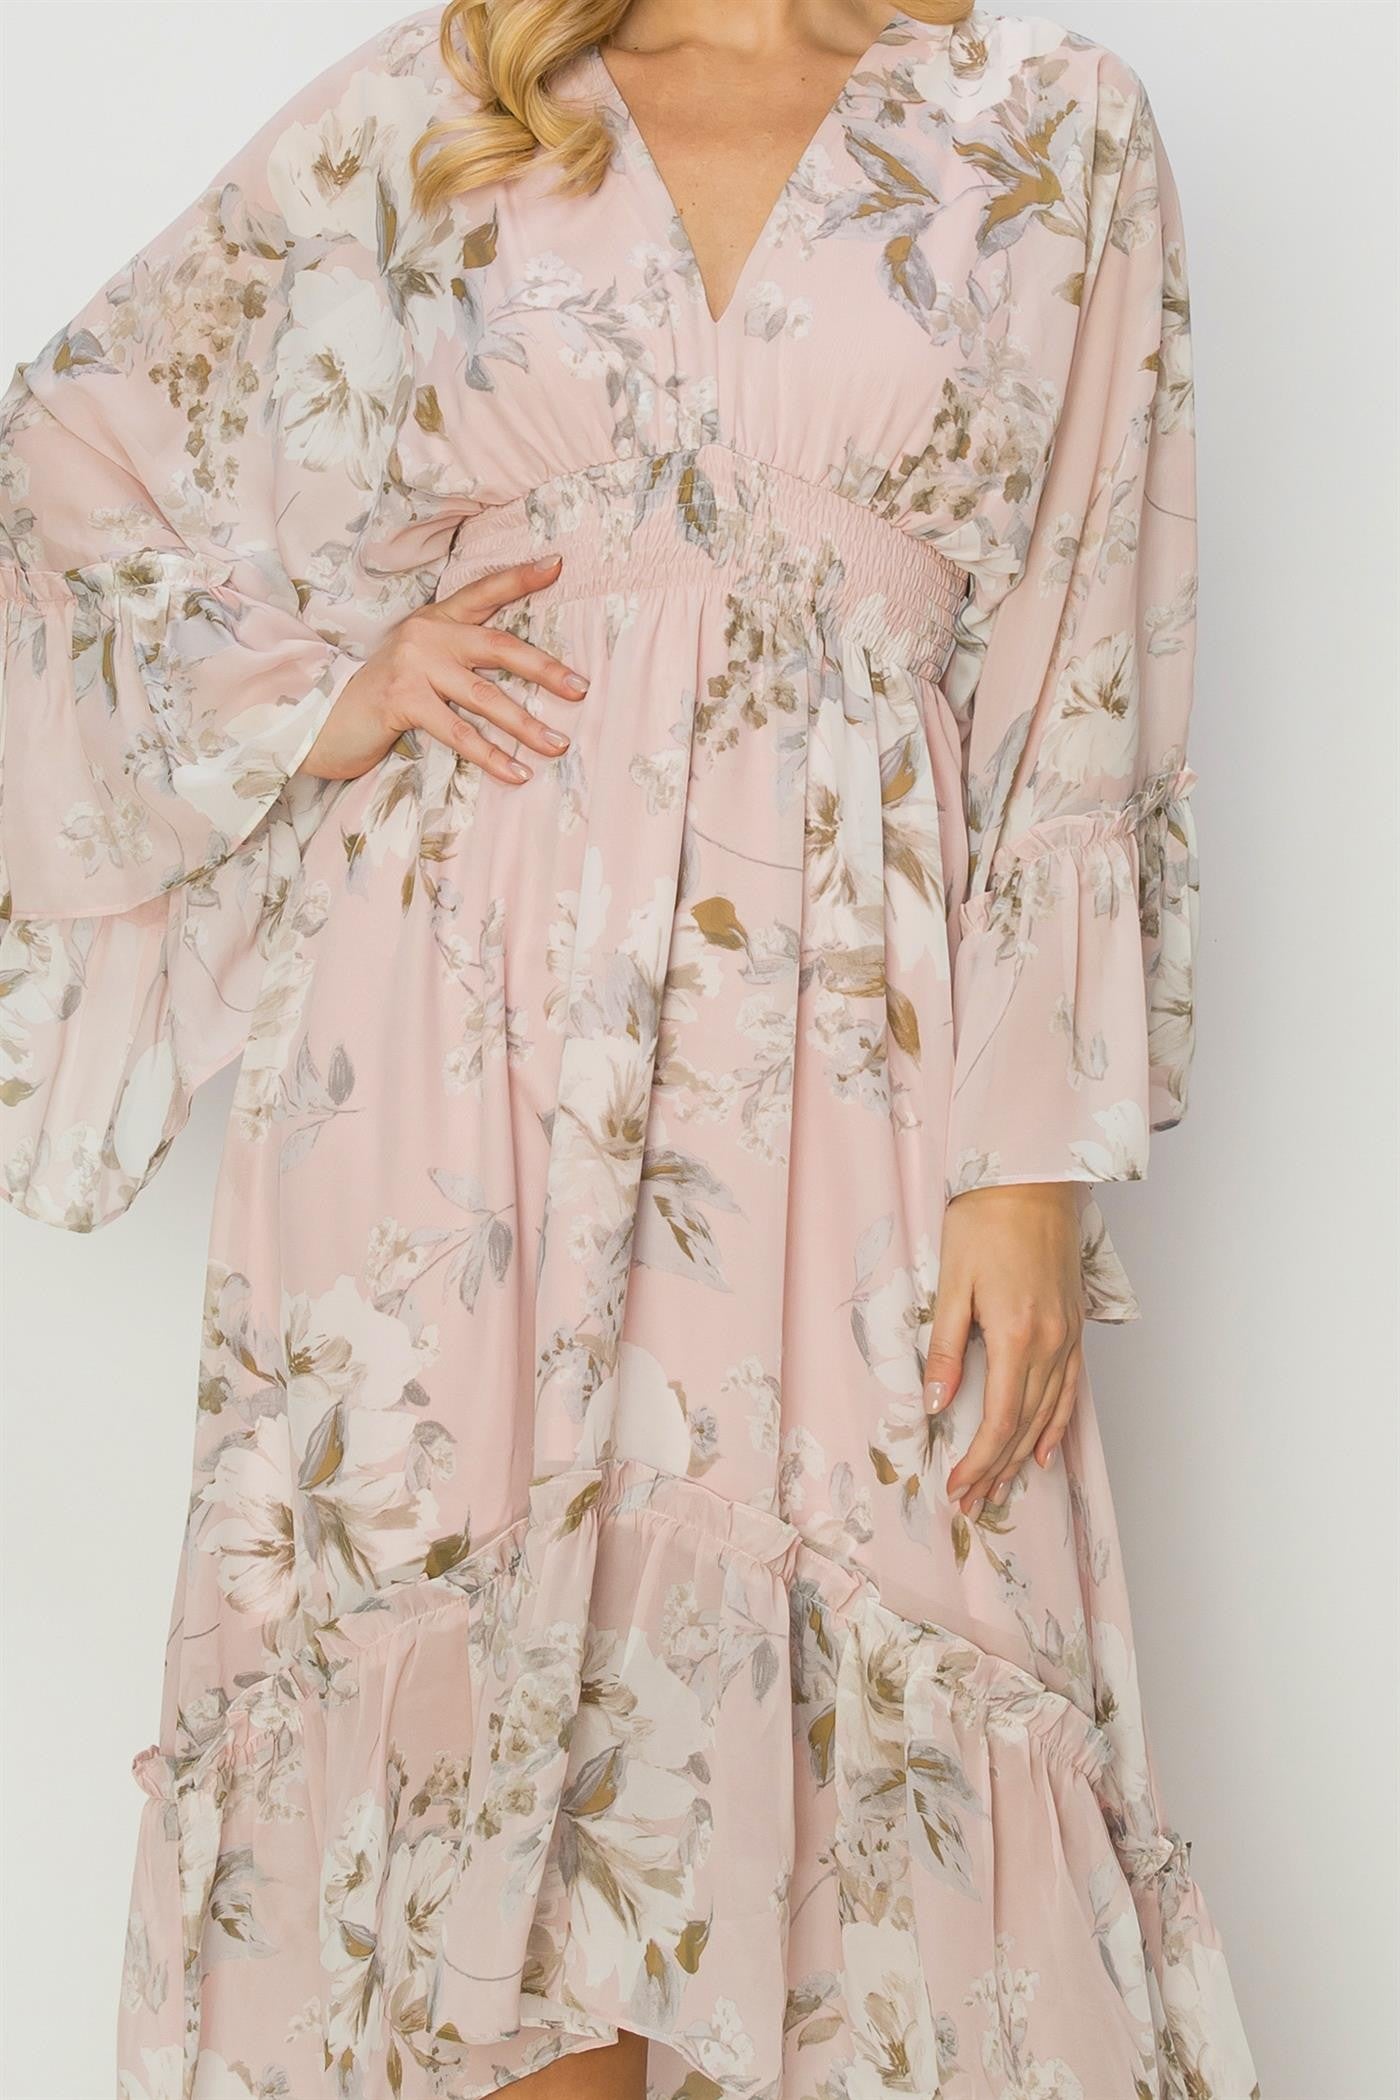 Blush Bell Sleeve Floral Midi Dress